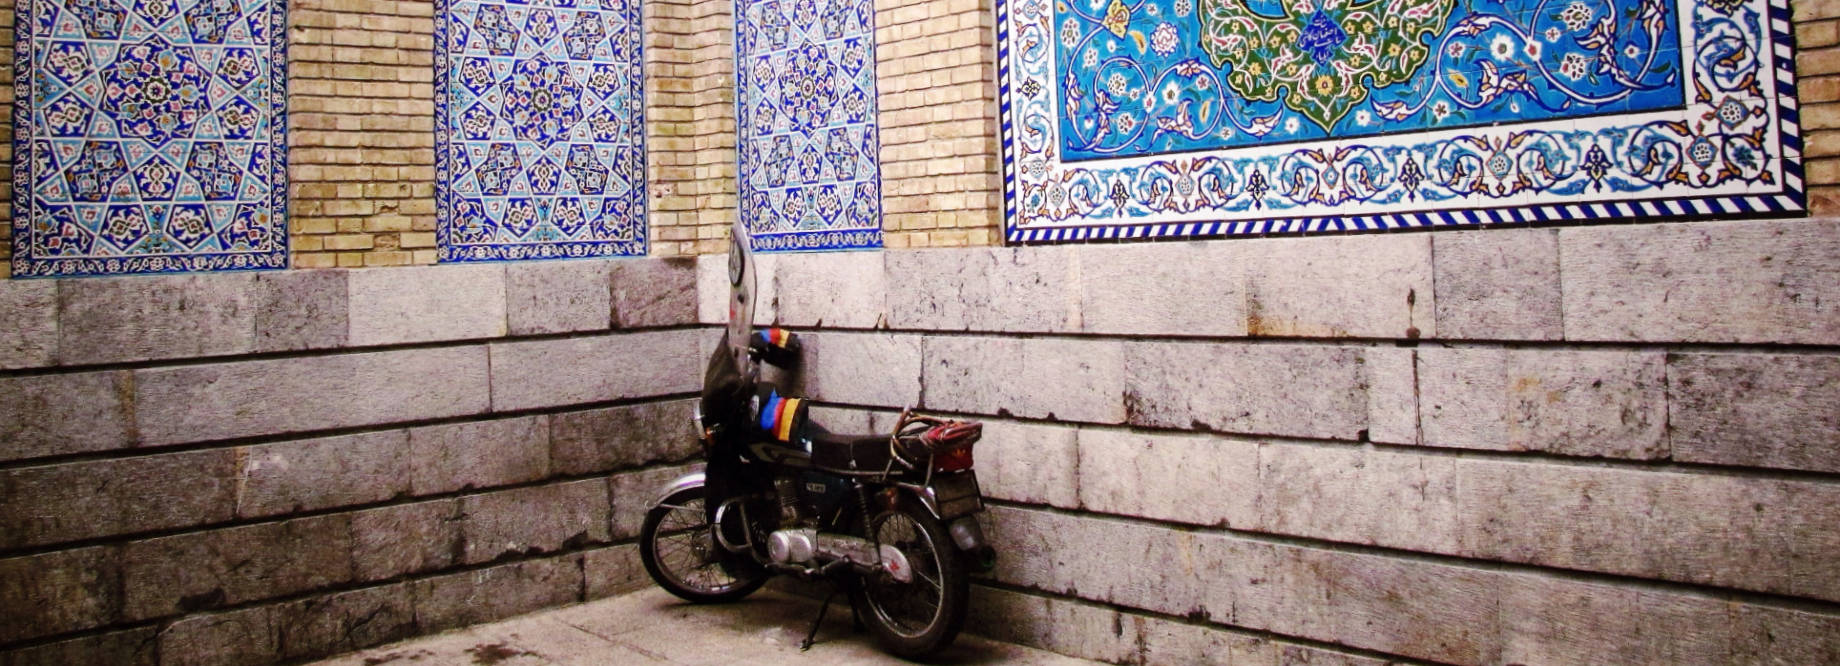 KTO THEATRE, Iran, photo Bartek Cieniawa